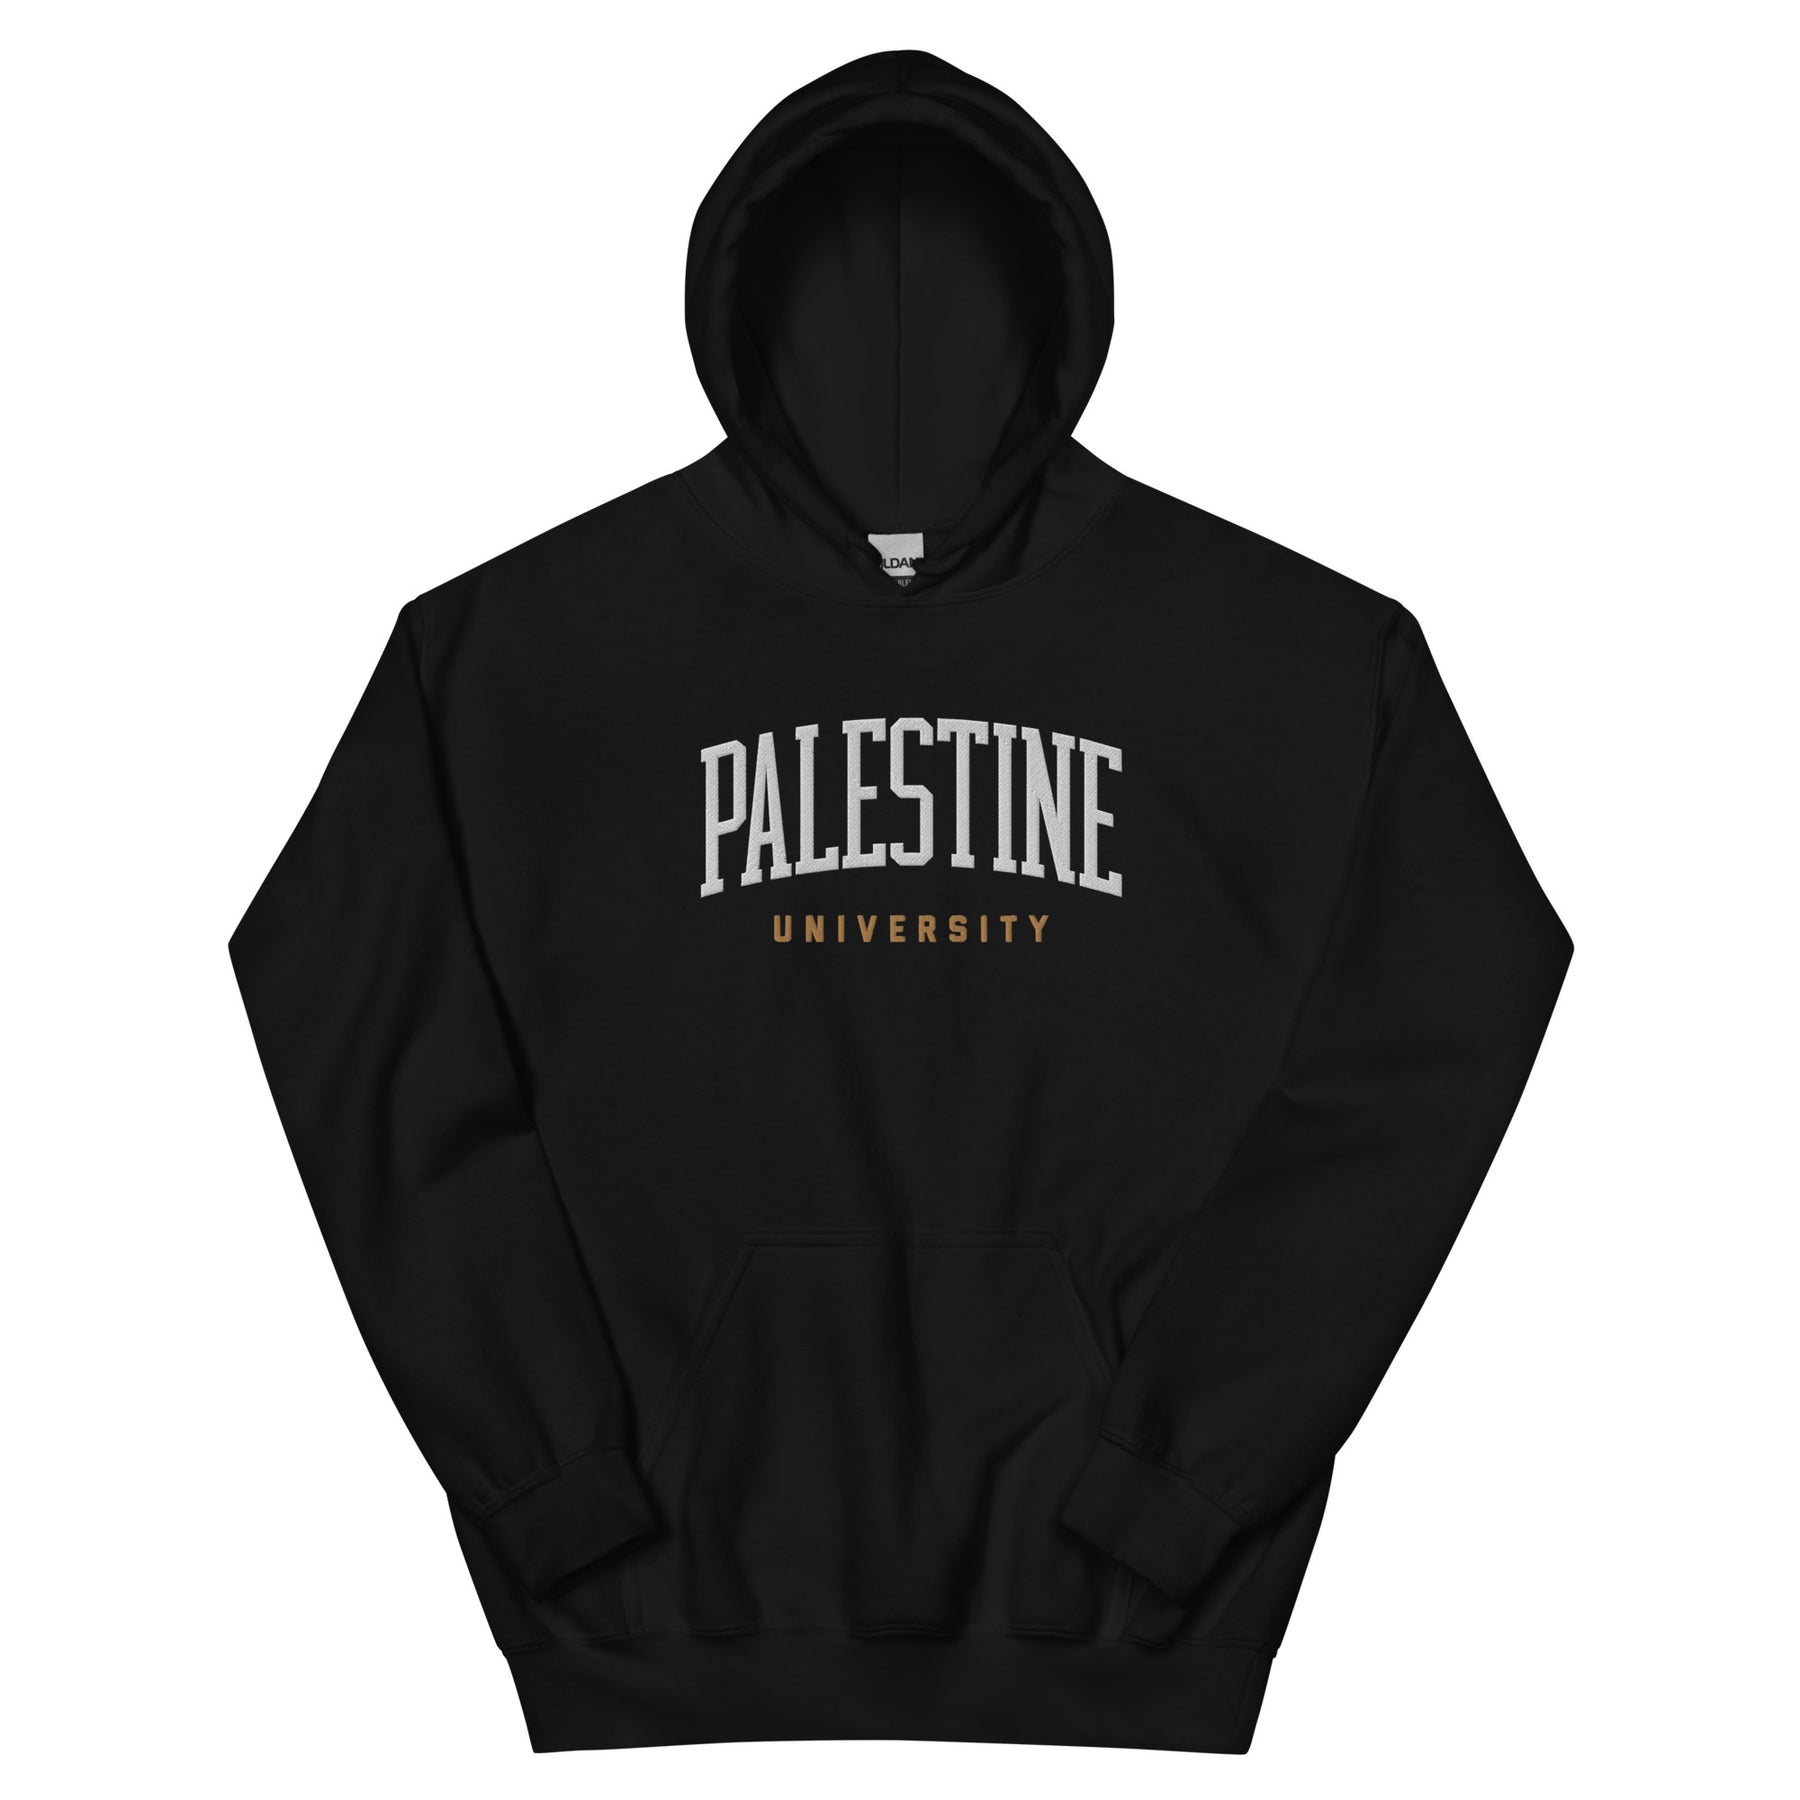 Palestine university hoodie in black by Dar Collective